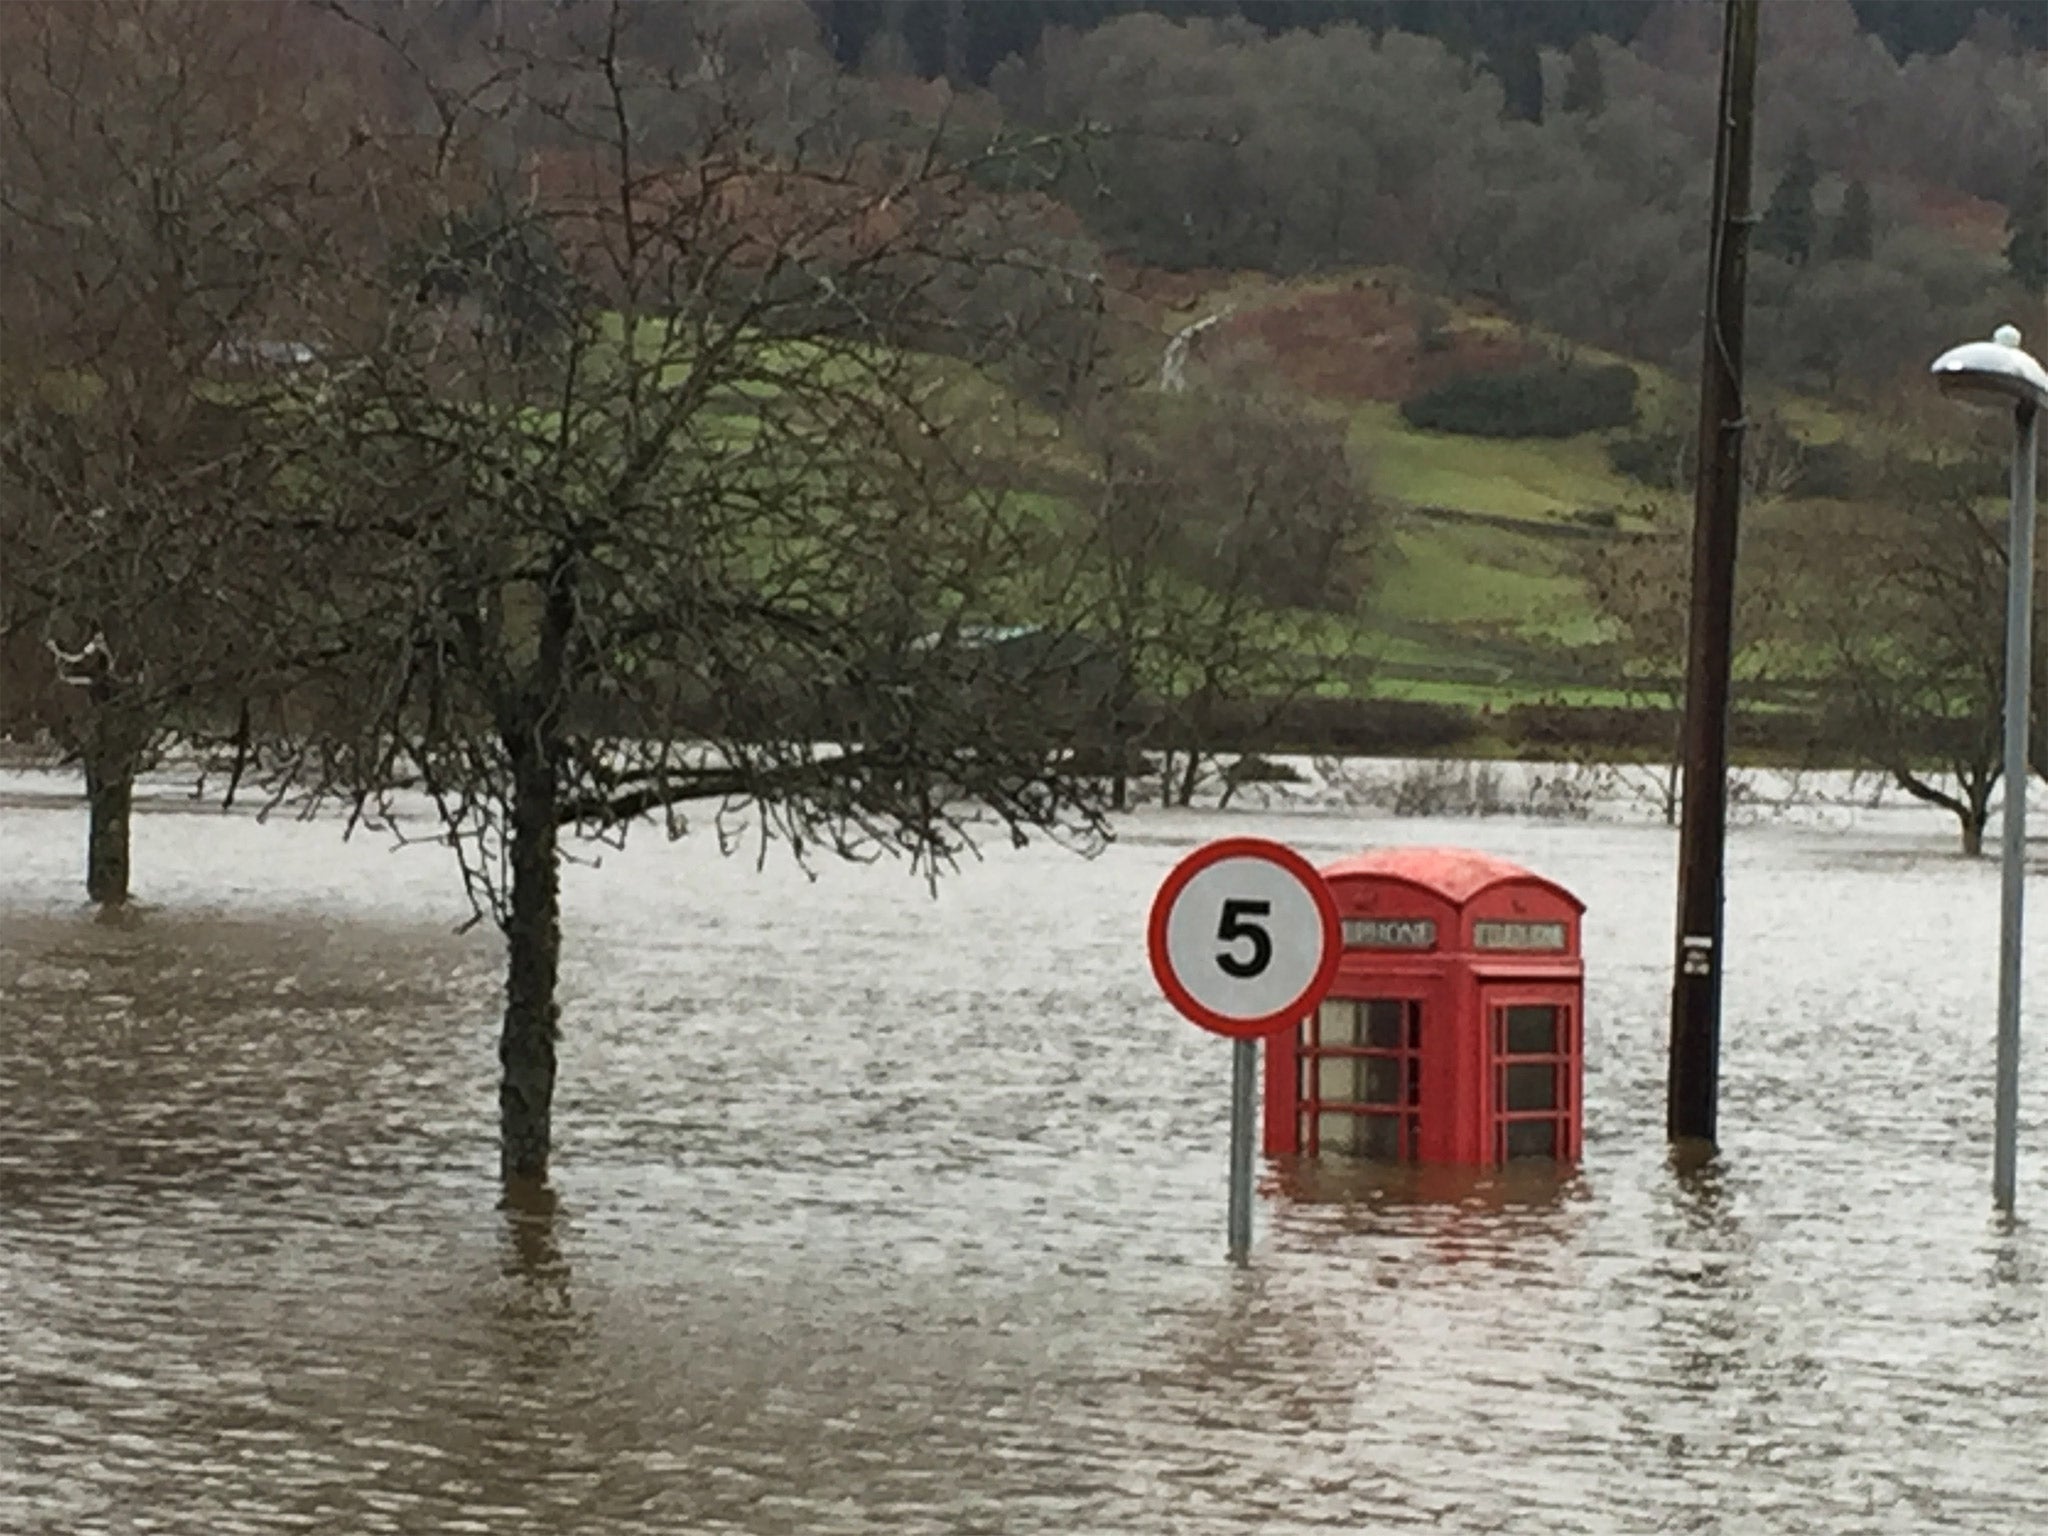 &#13;
Flooding in the village of Aberfeldy, Perthshire, Scotland &#13;